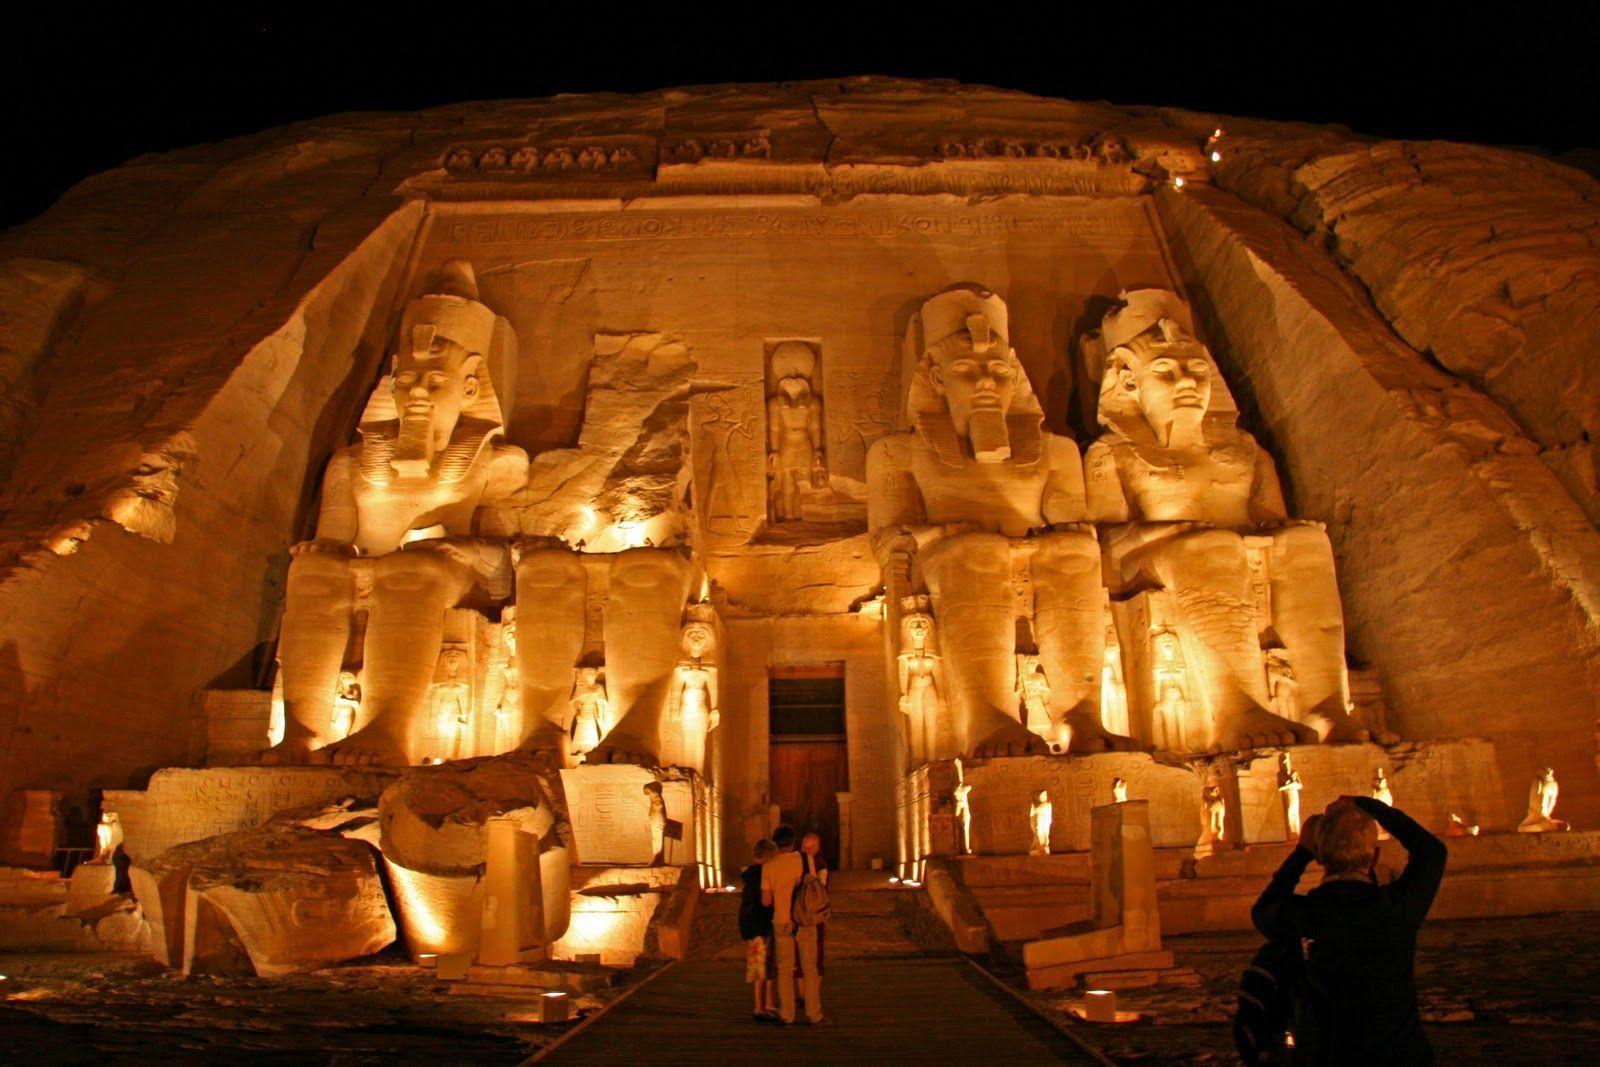 trololo blogg: Wallpaper Egypt Pyramids